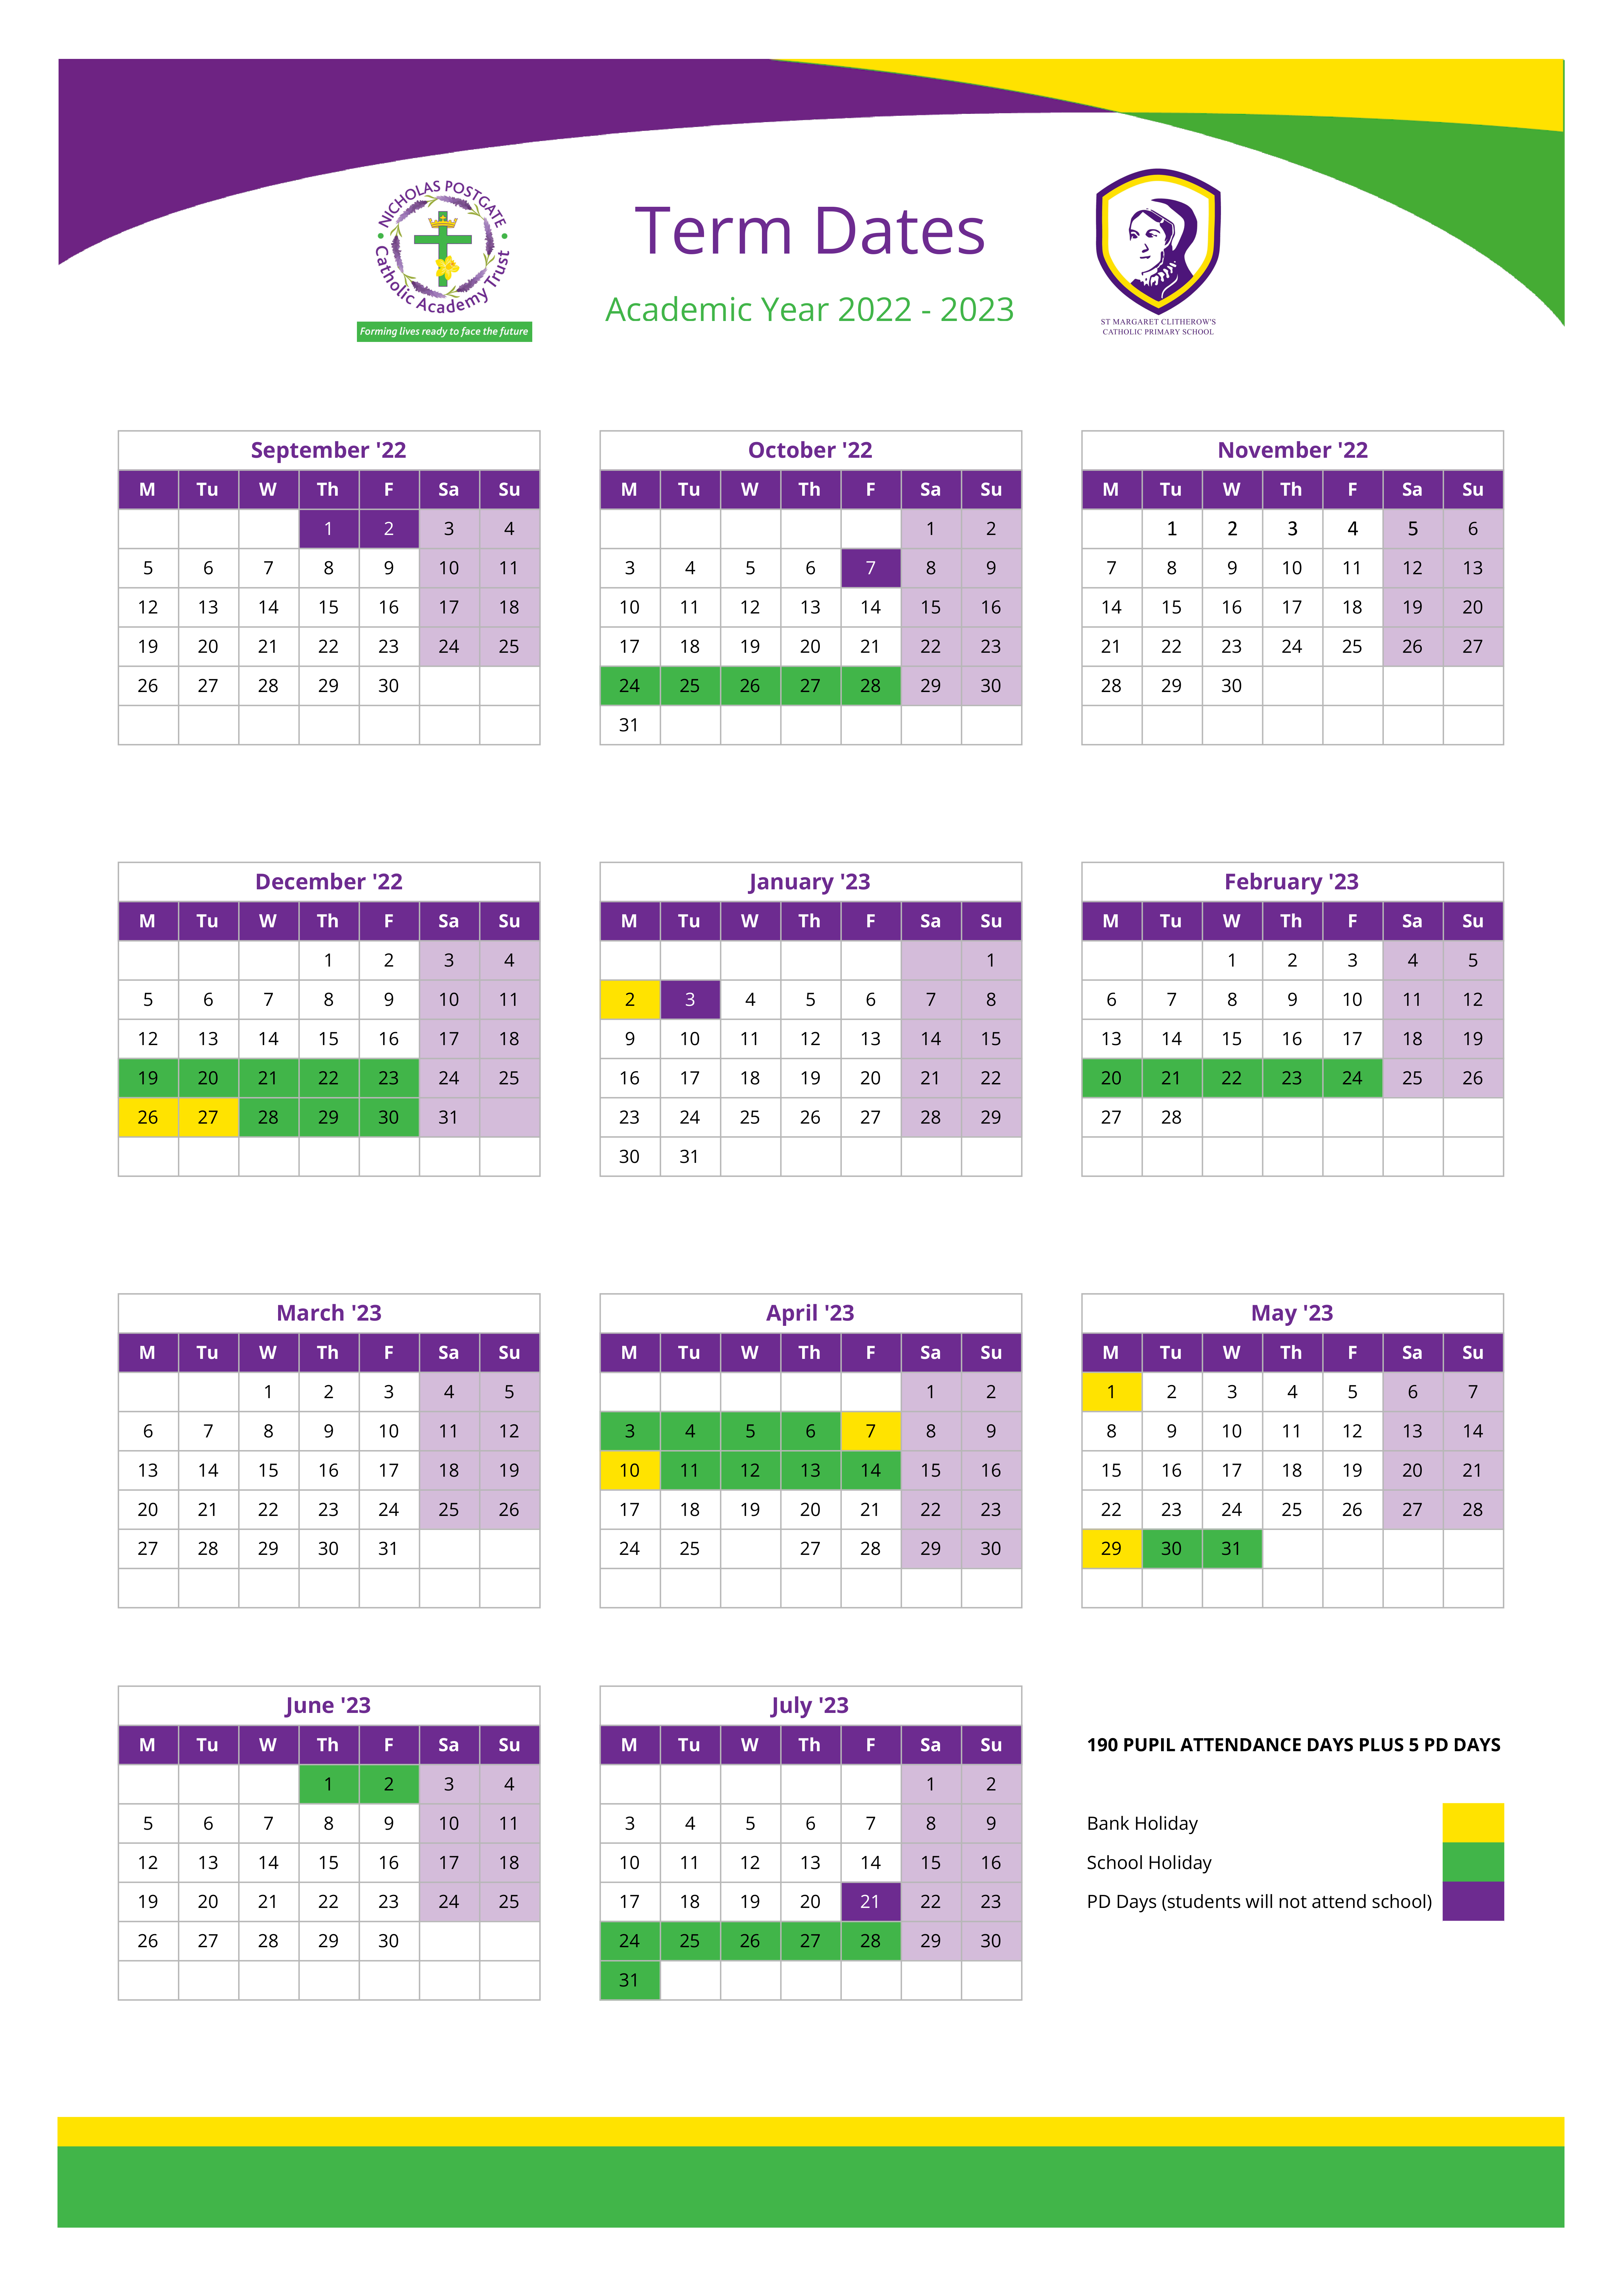 Term Dates 2022-2023